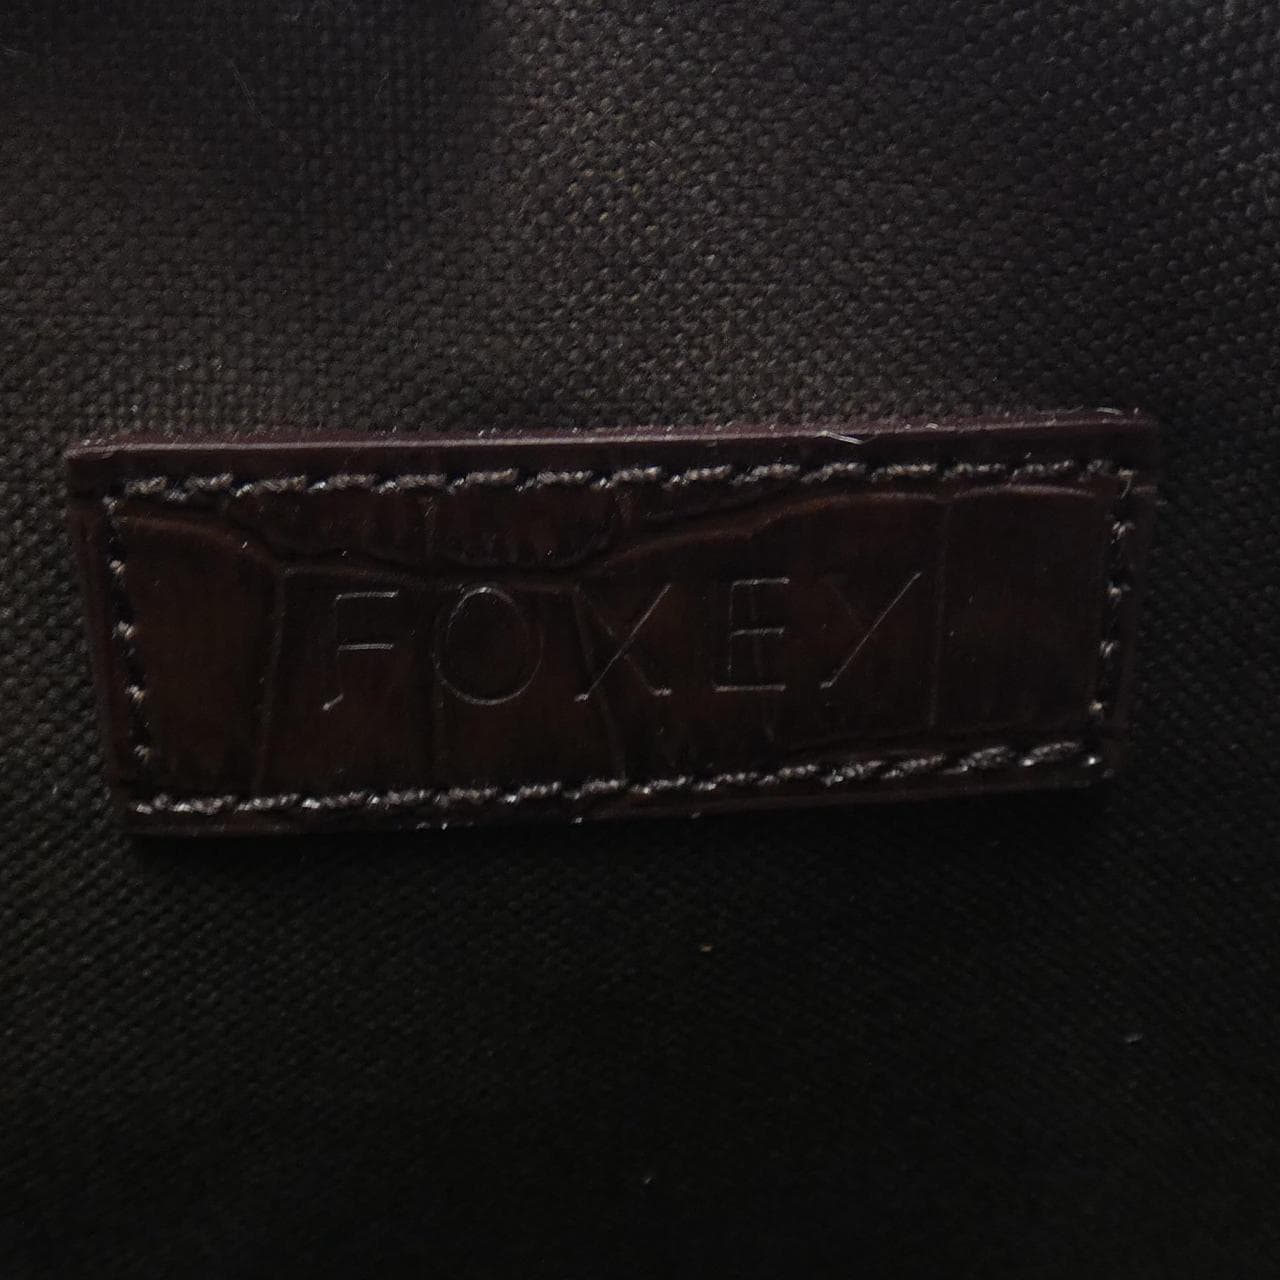 Foxy FOXEY BAG